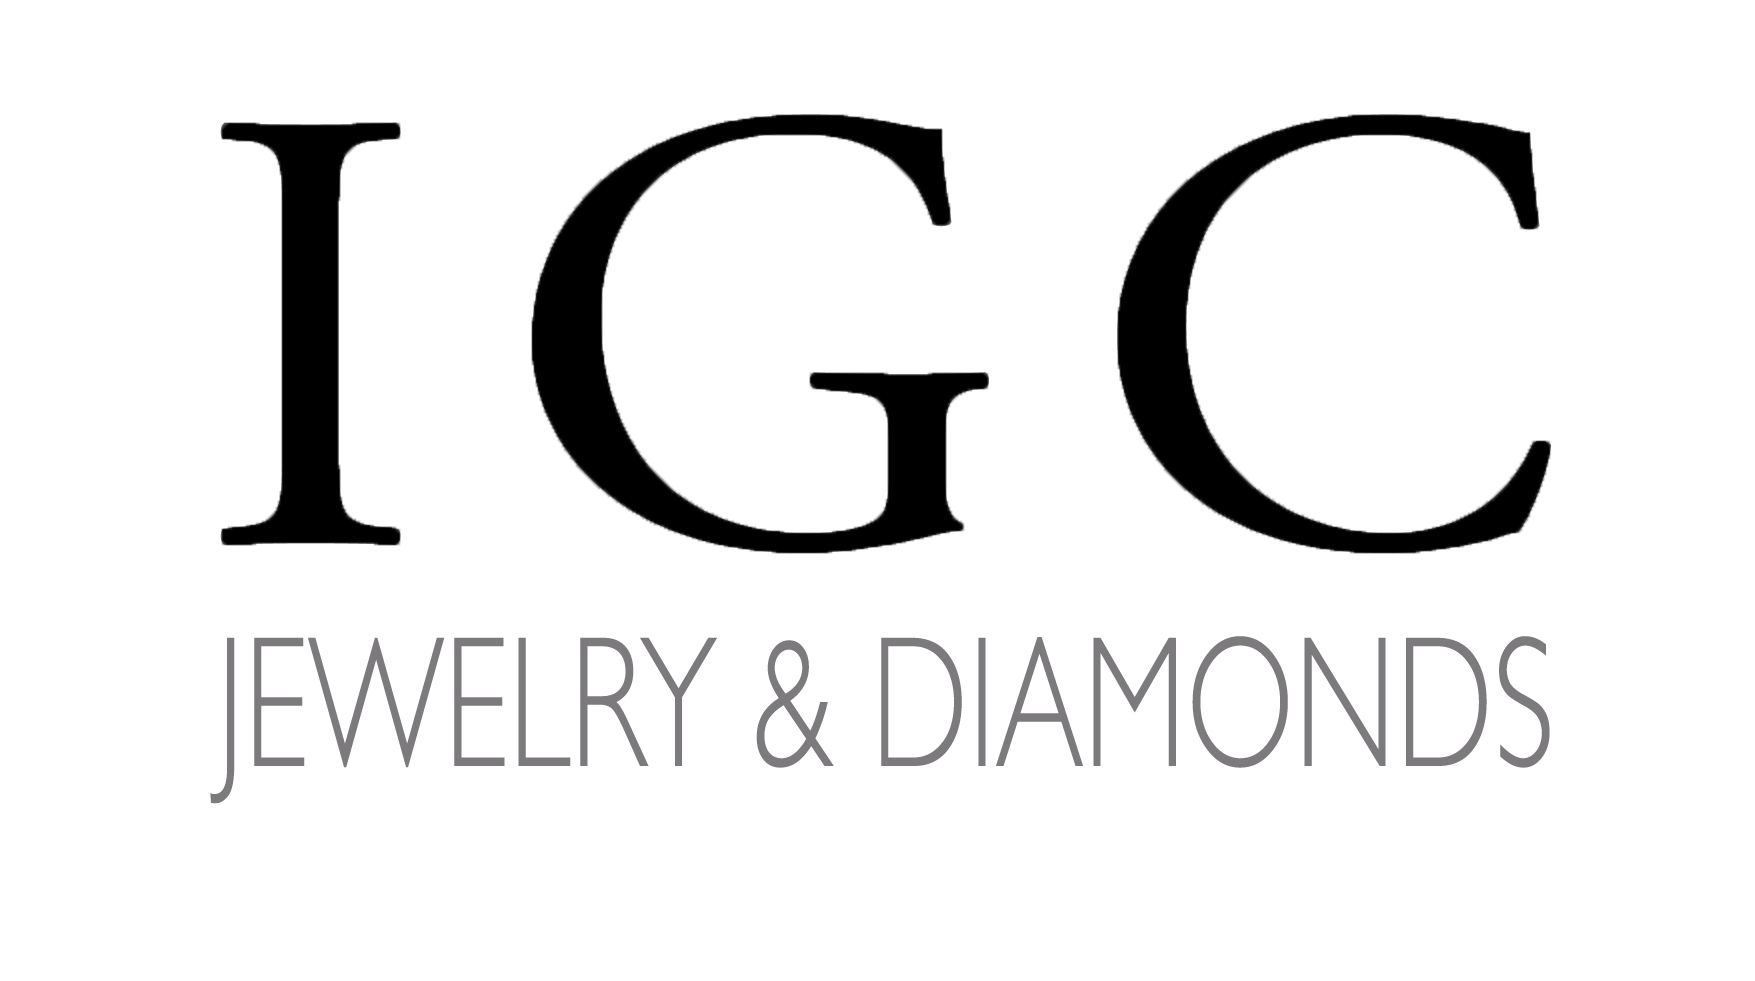 IGC Jewelry & Diamonds